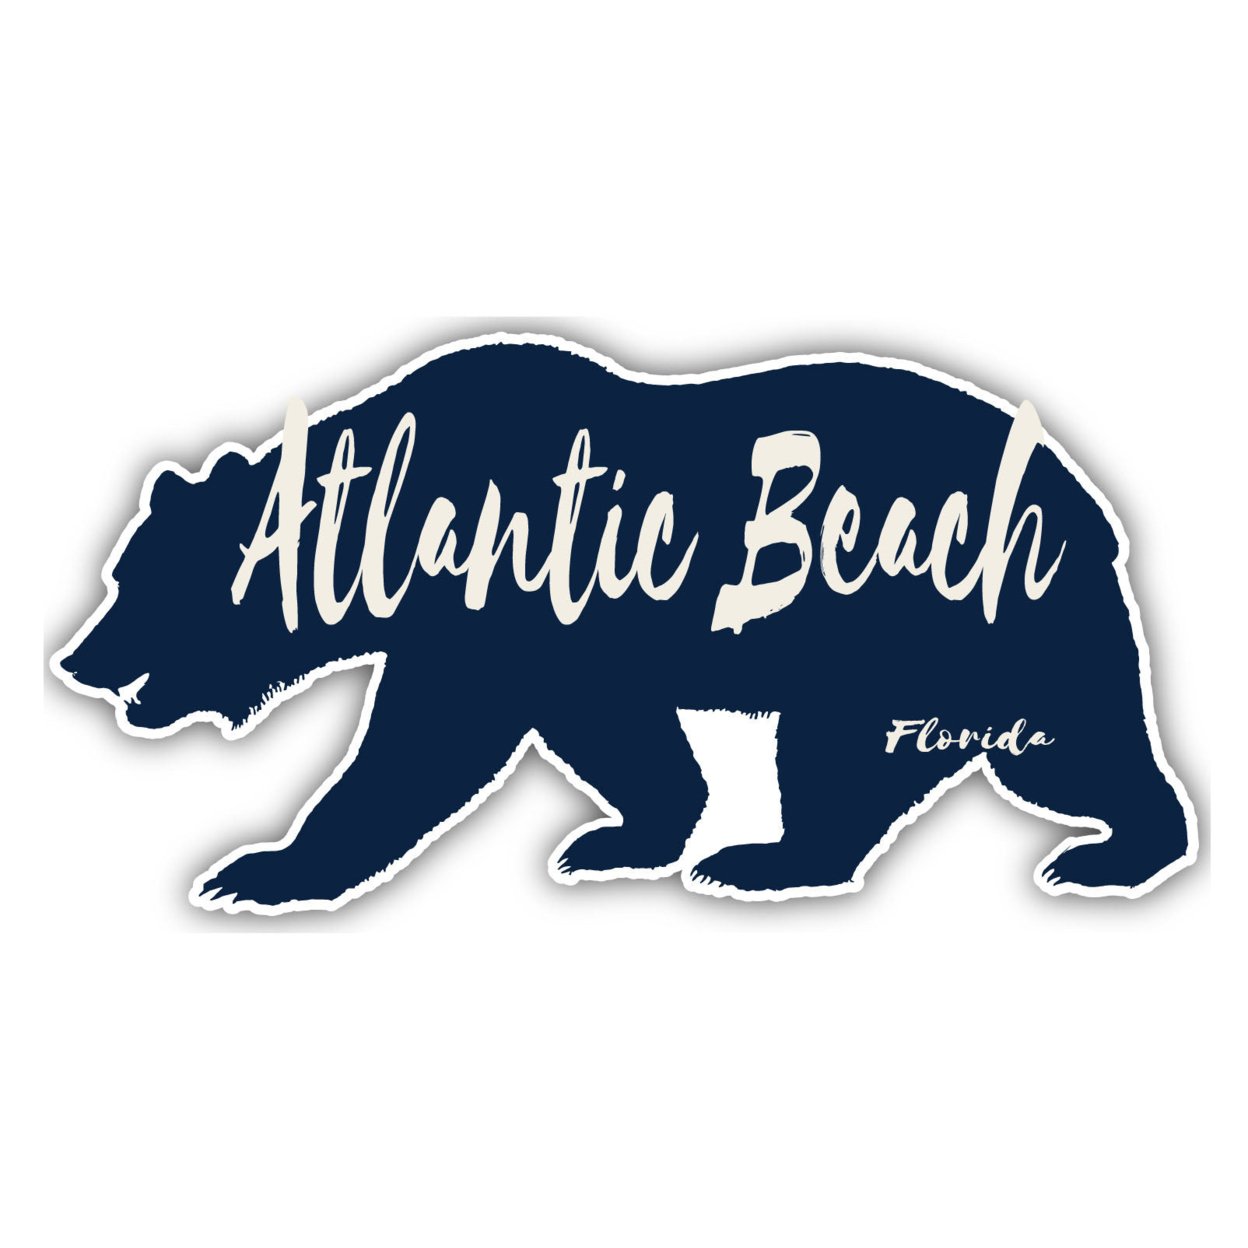 Atlantic Beach Florida Souvenir Decorative Stickers (Choose Theme And Size) - 4-Pack, 8-Inch, Bear